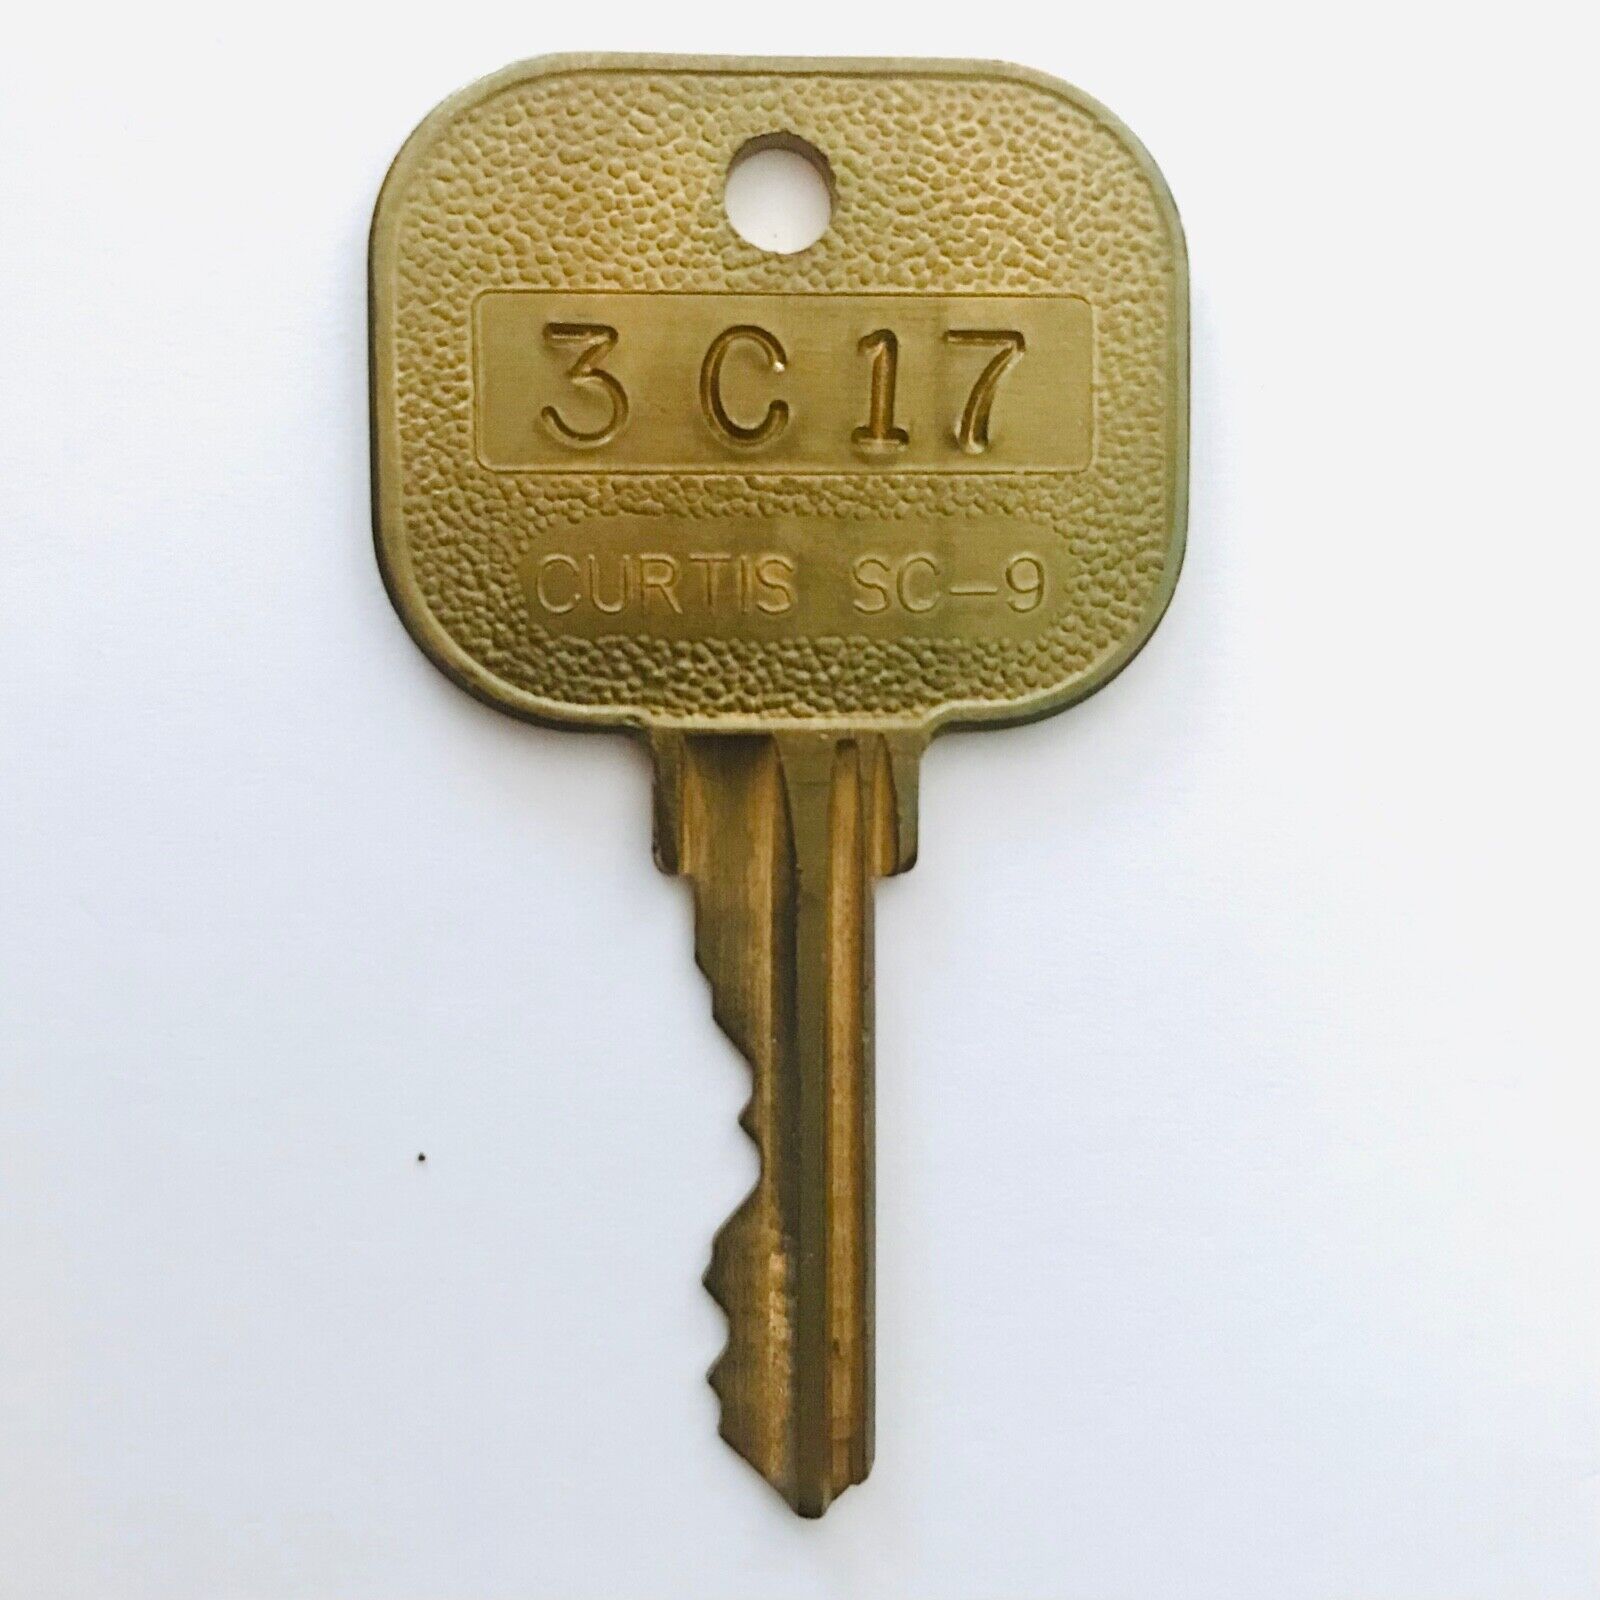 Vtg Brass Hotel Room Key #3C17 Original Motel Key No Location Square Head